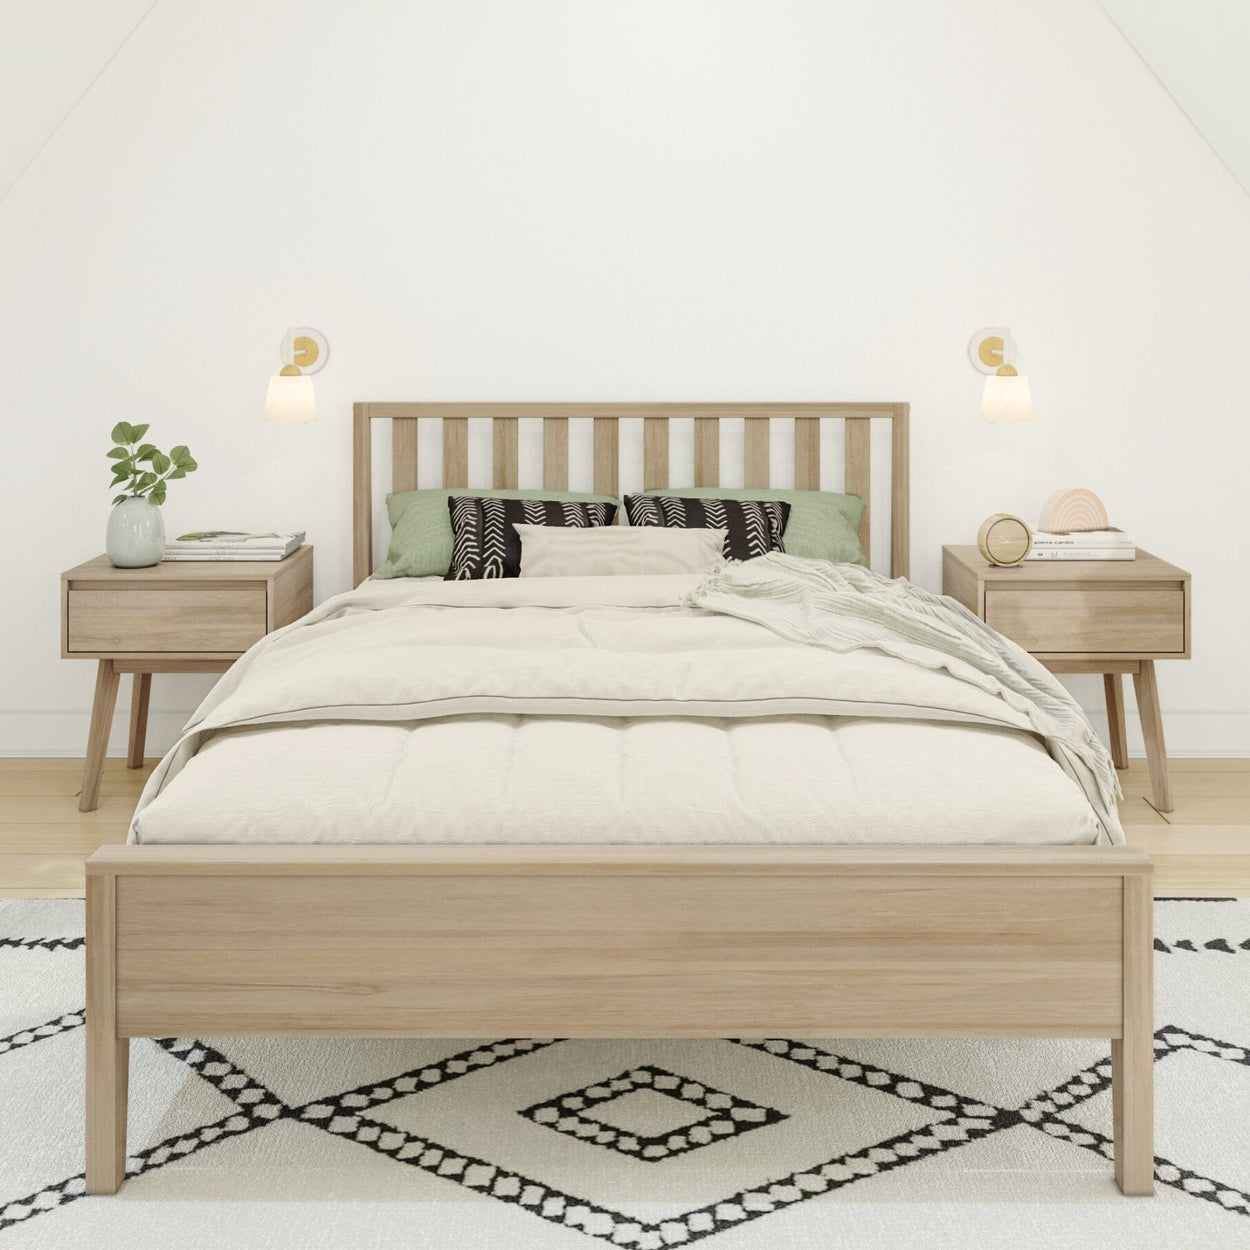 210211-010 : Kids Beds Scandinavian Full-Size Bed with Slatted Headboard, Blonde